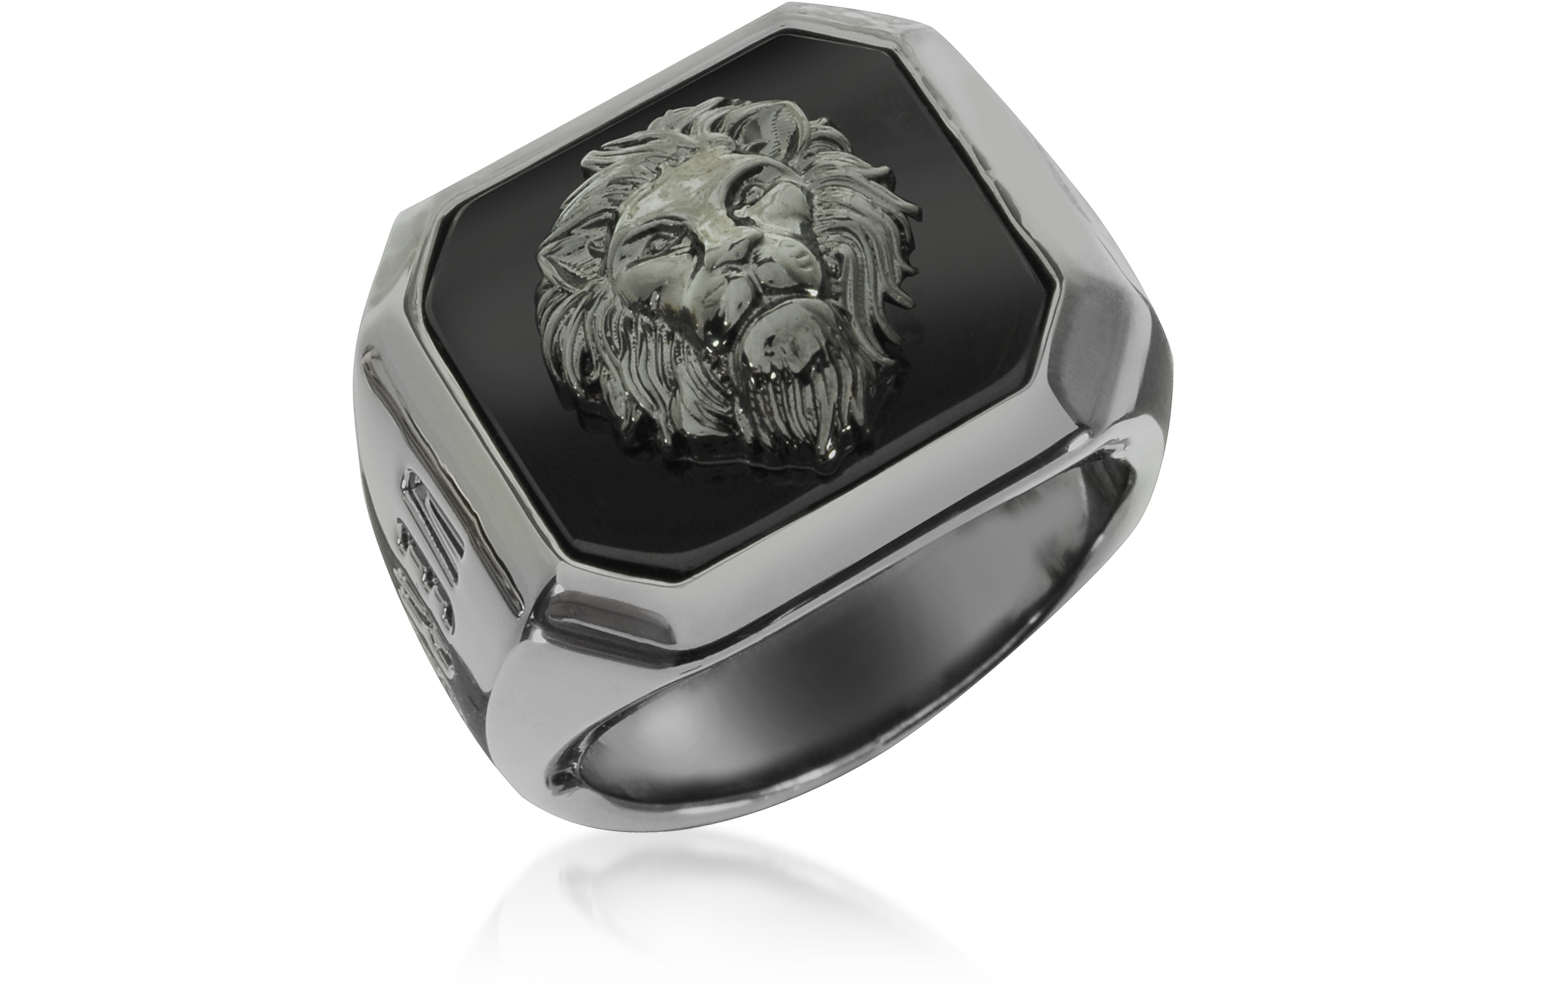 versace lion head ring